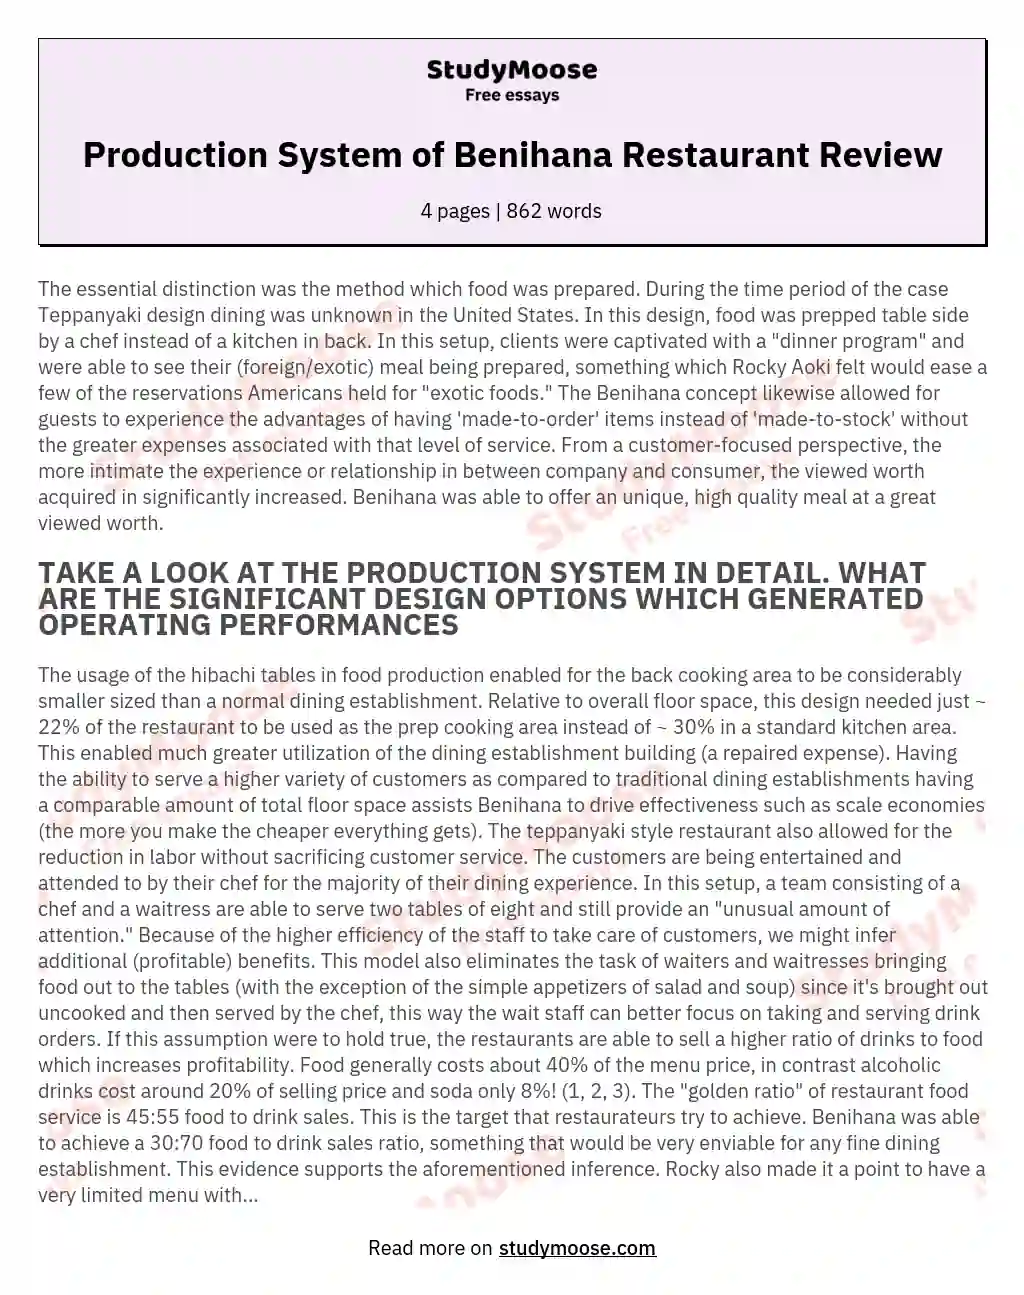 Production System of Benihana Restaurant Review essay